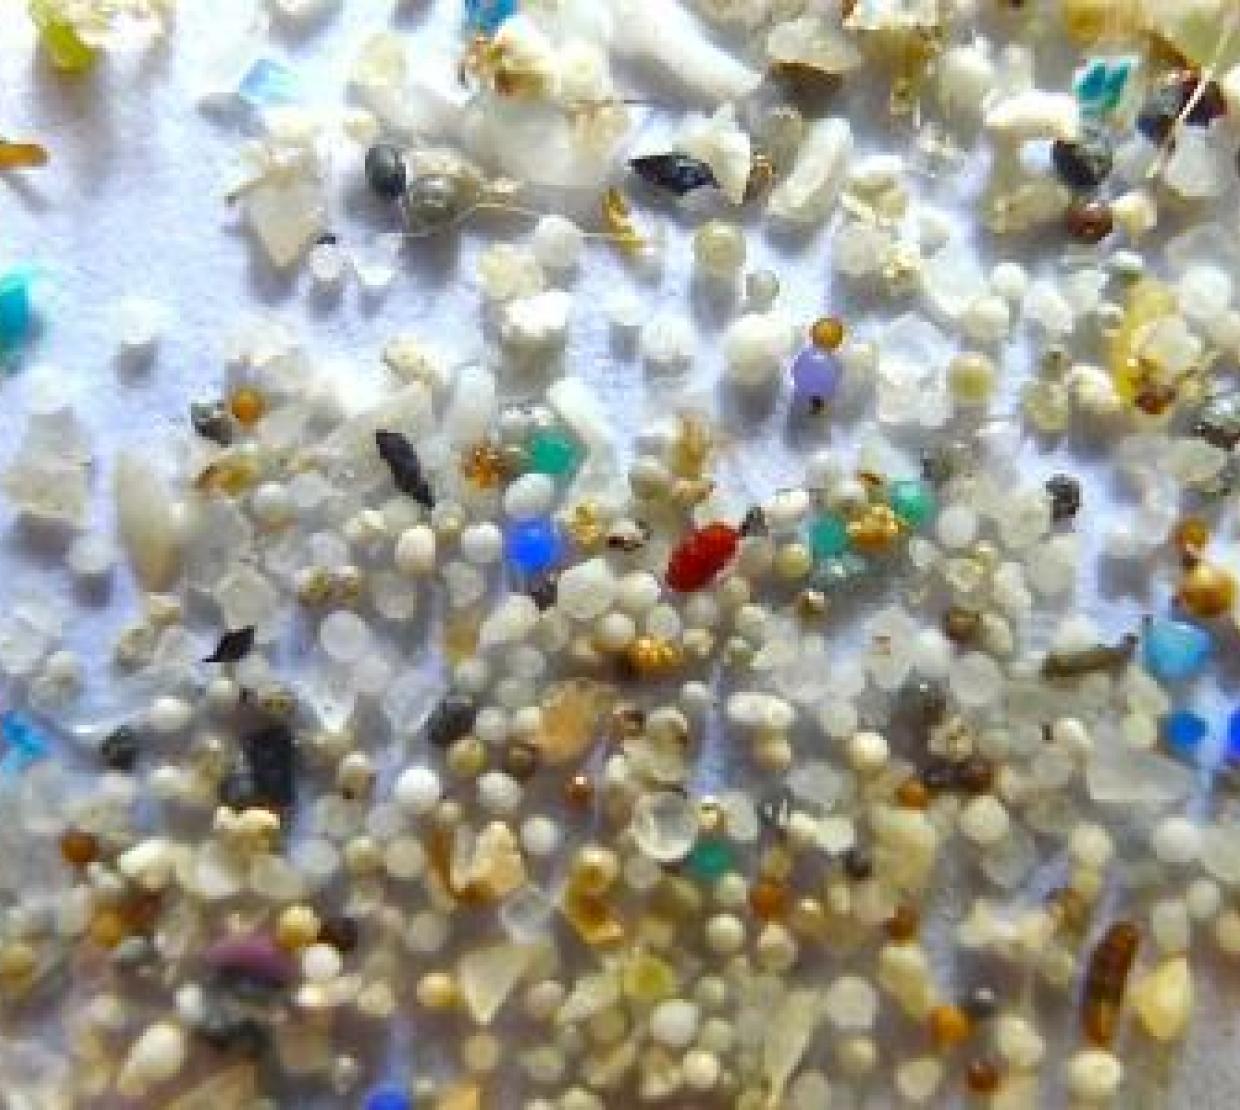 Microplastic beads.